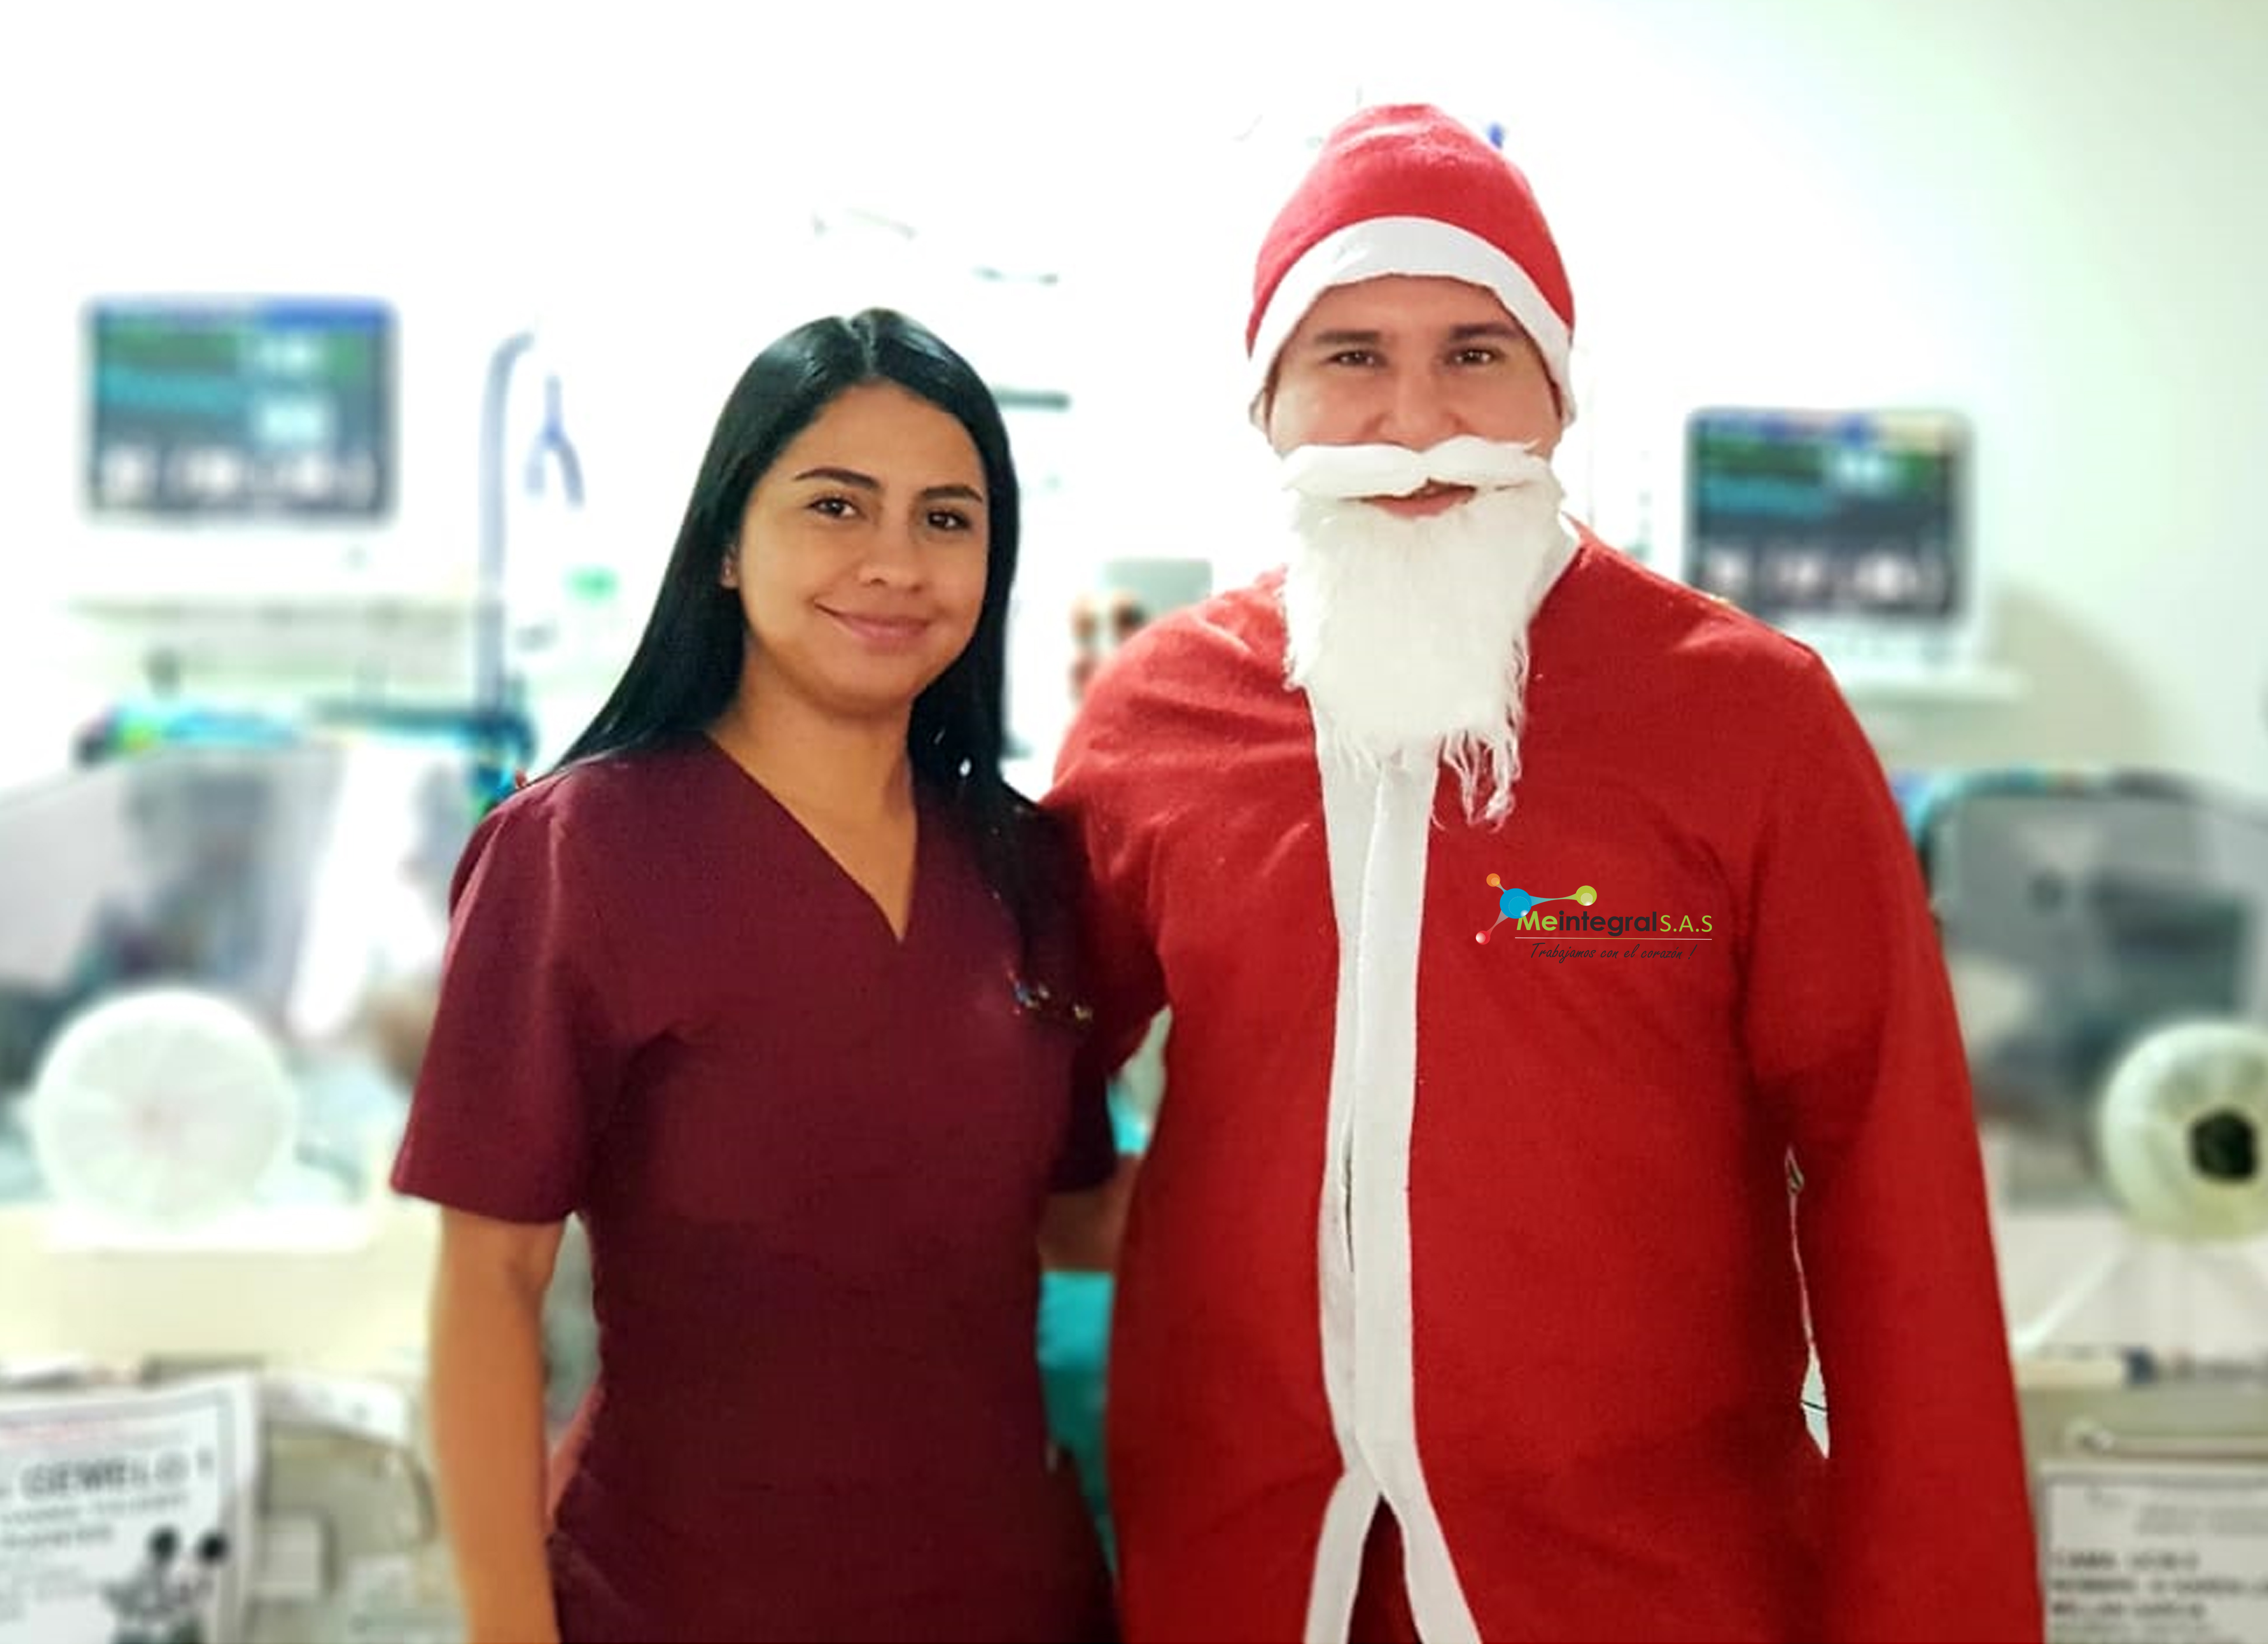 En Diciembre “Meintegral S.A.S” acompaña sus pacientes hospitalizados